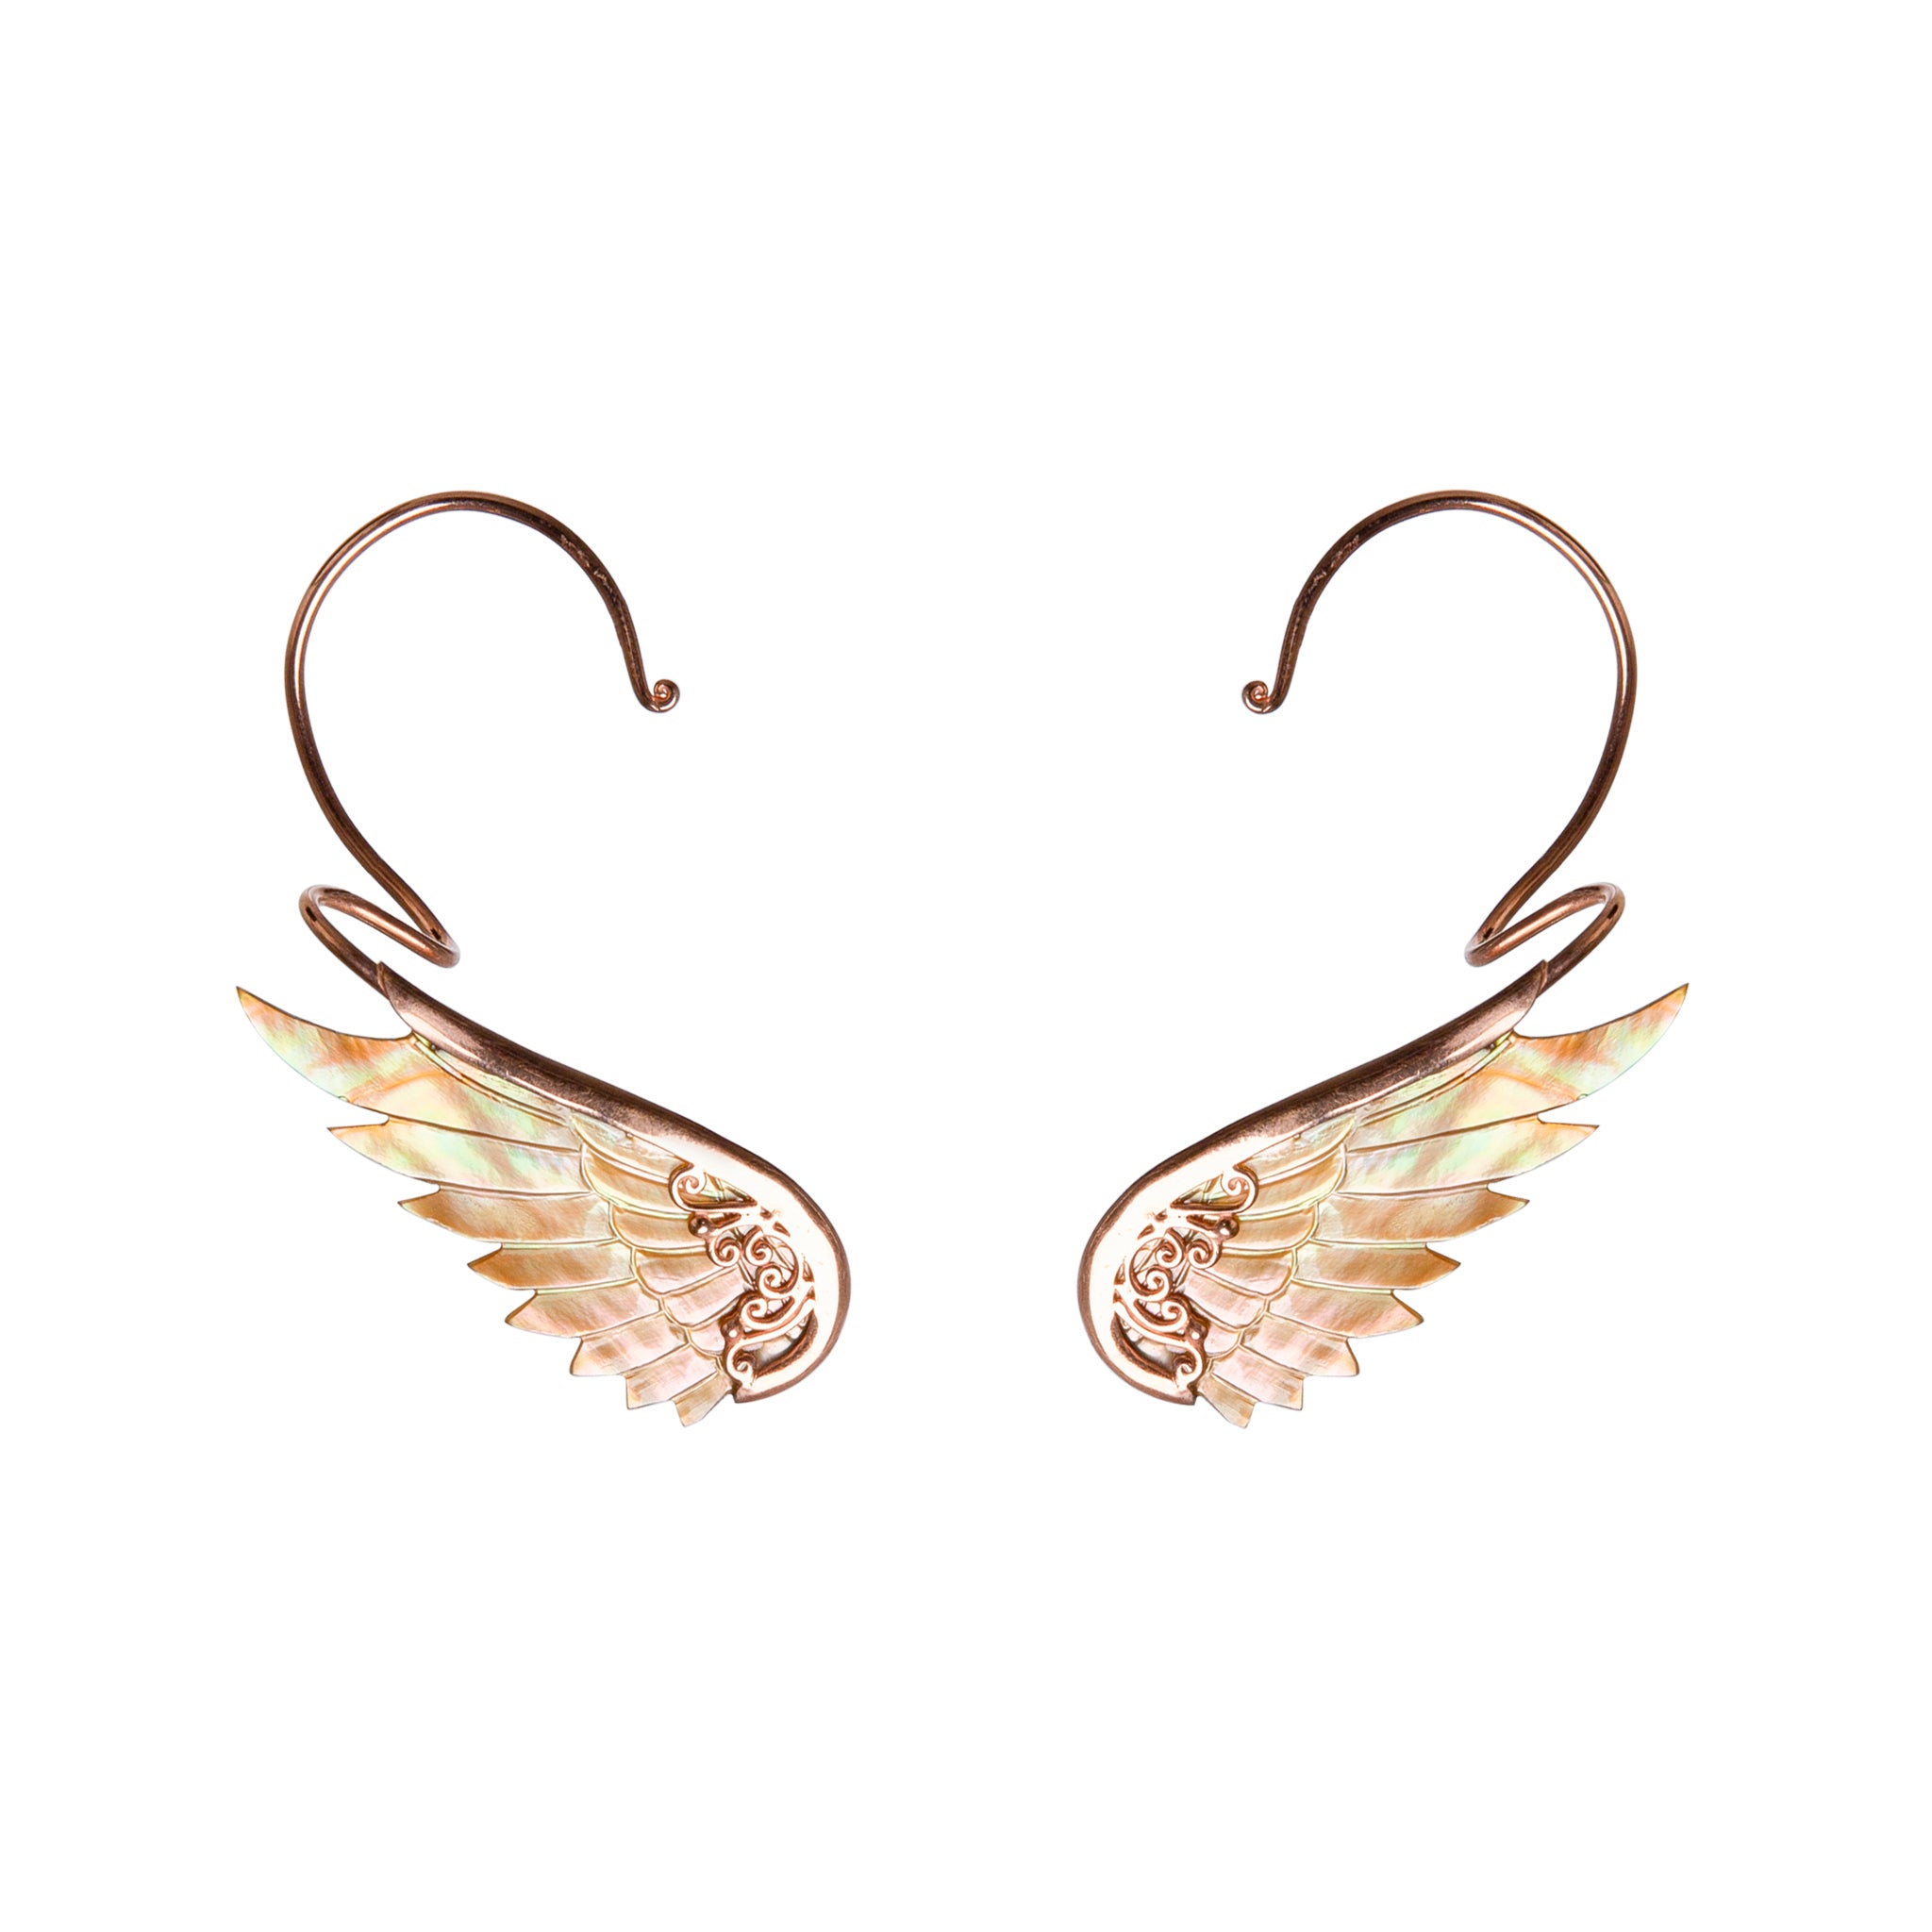 ASOS DESIGN golden wing ear cuff in gold tone